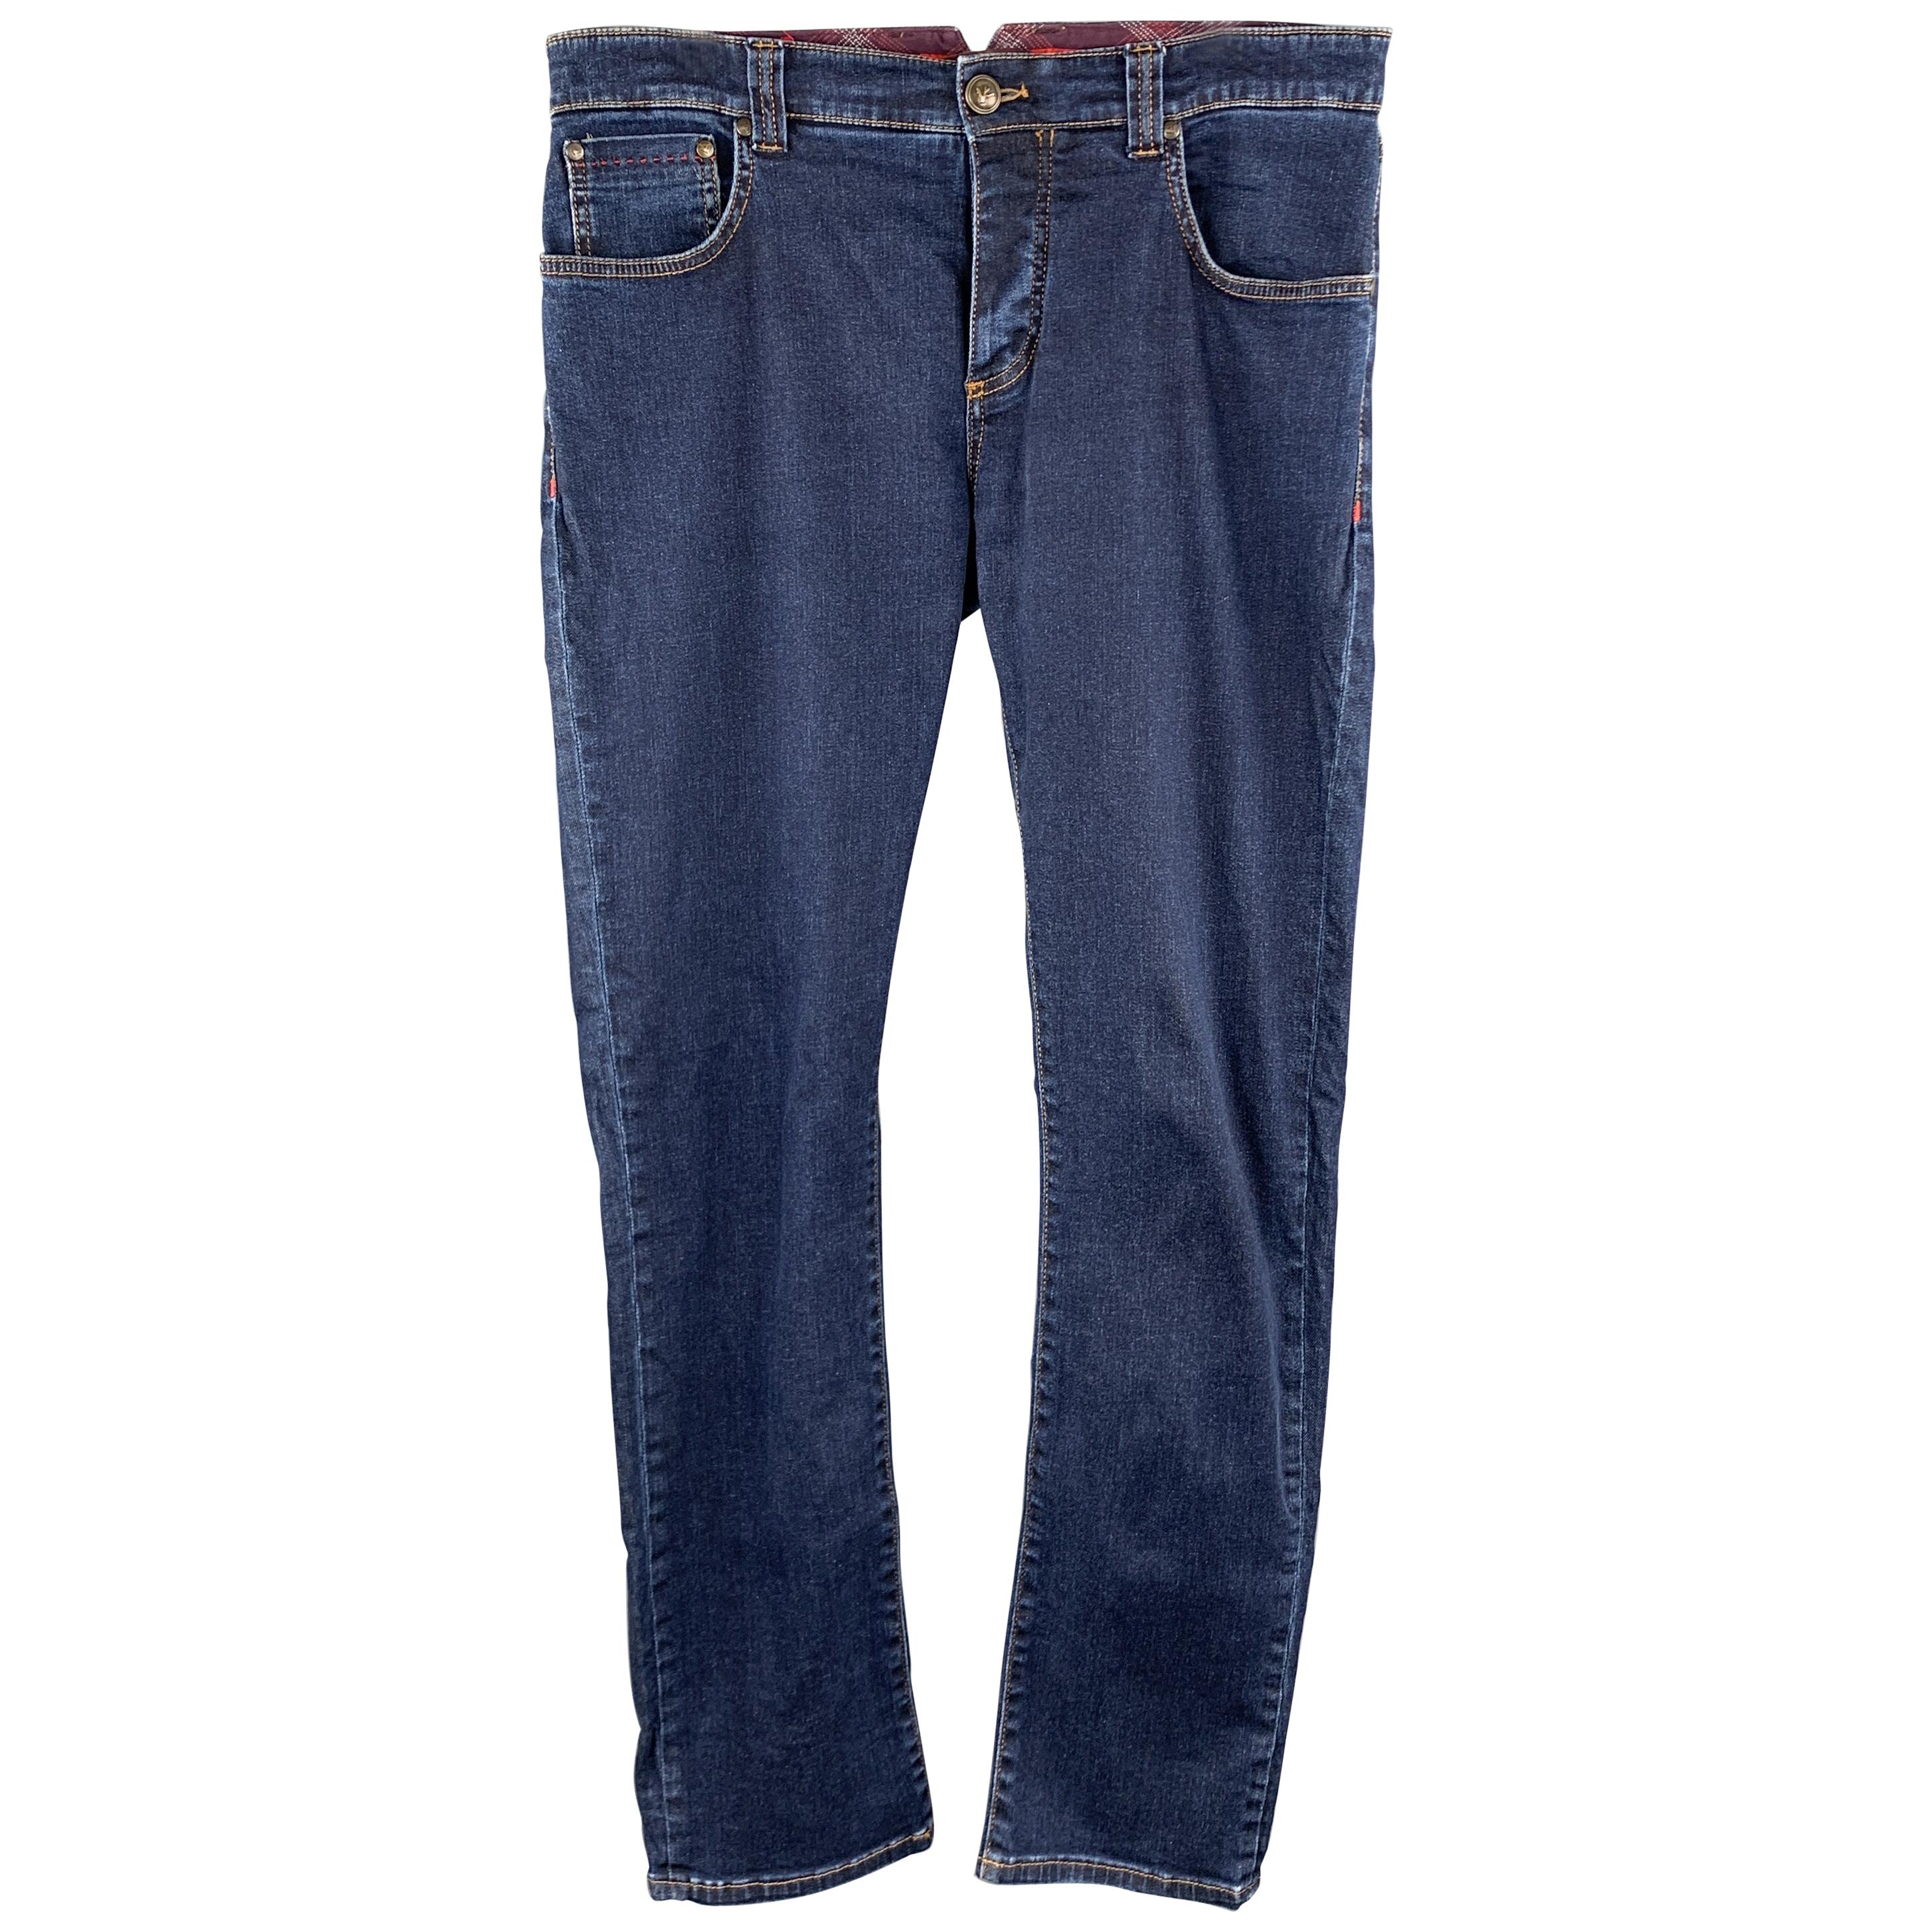 ISAIA Size 34 Indigo Denim Contrast Stitching Button Fly Jeans